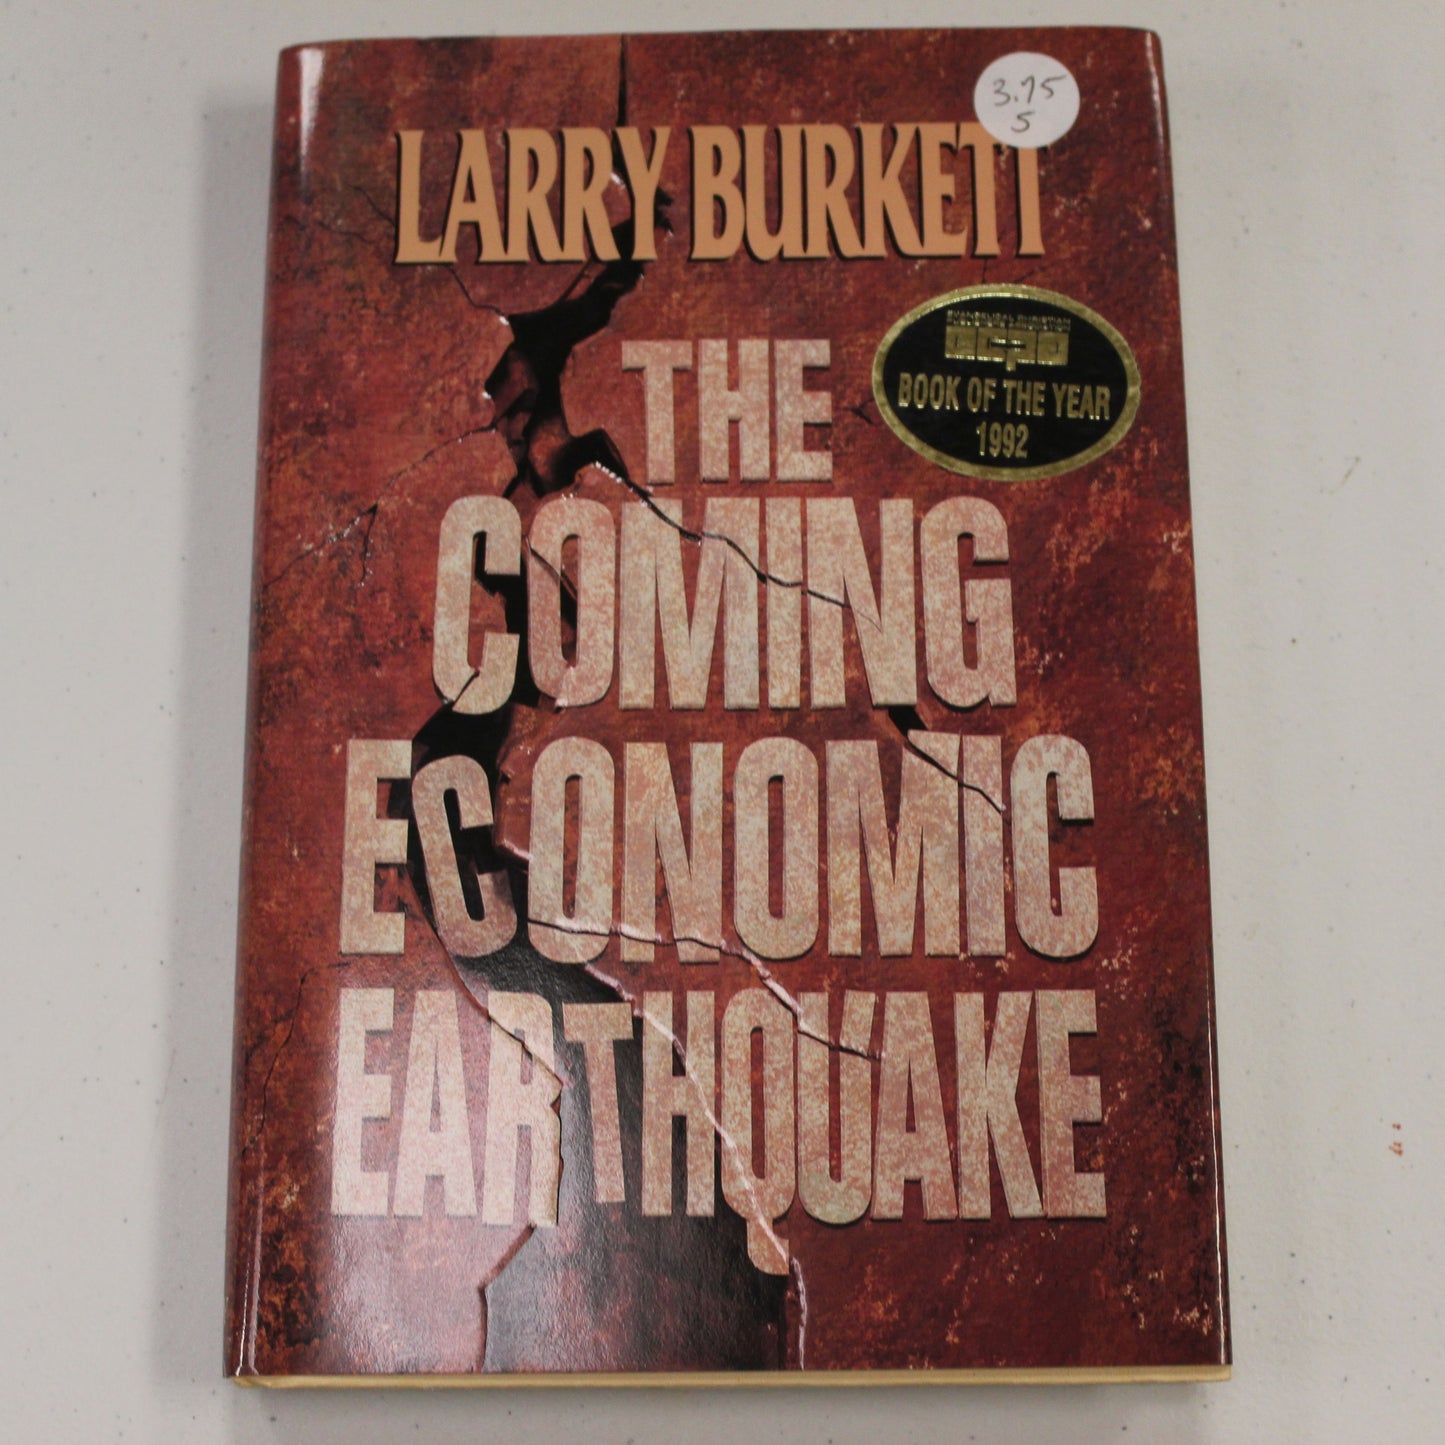 THE COMING ECONOMIC EARTHQUAKE